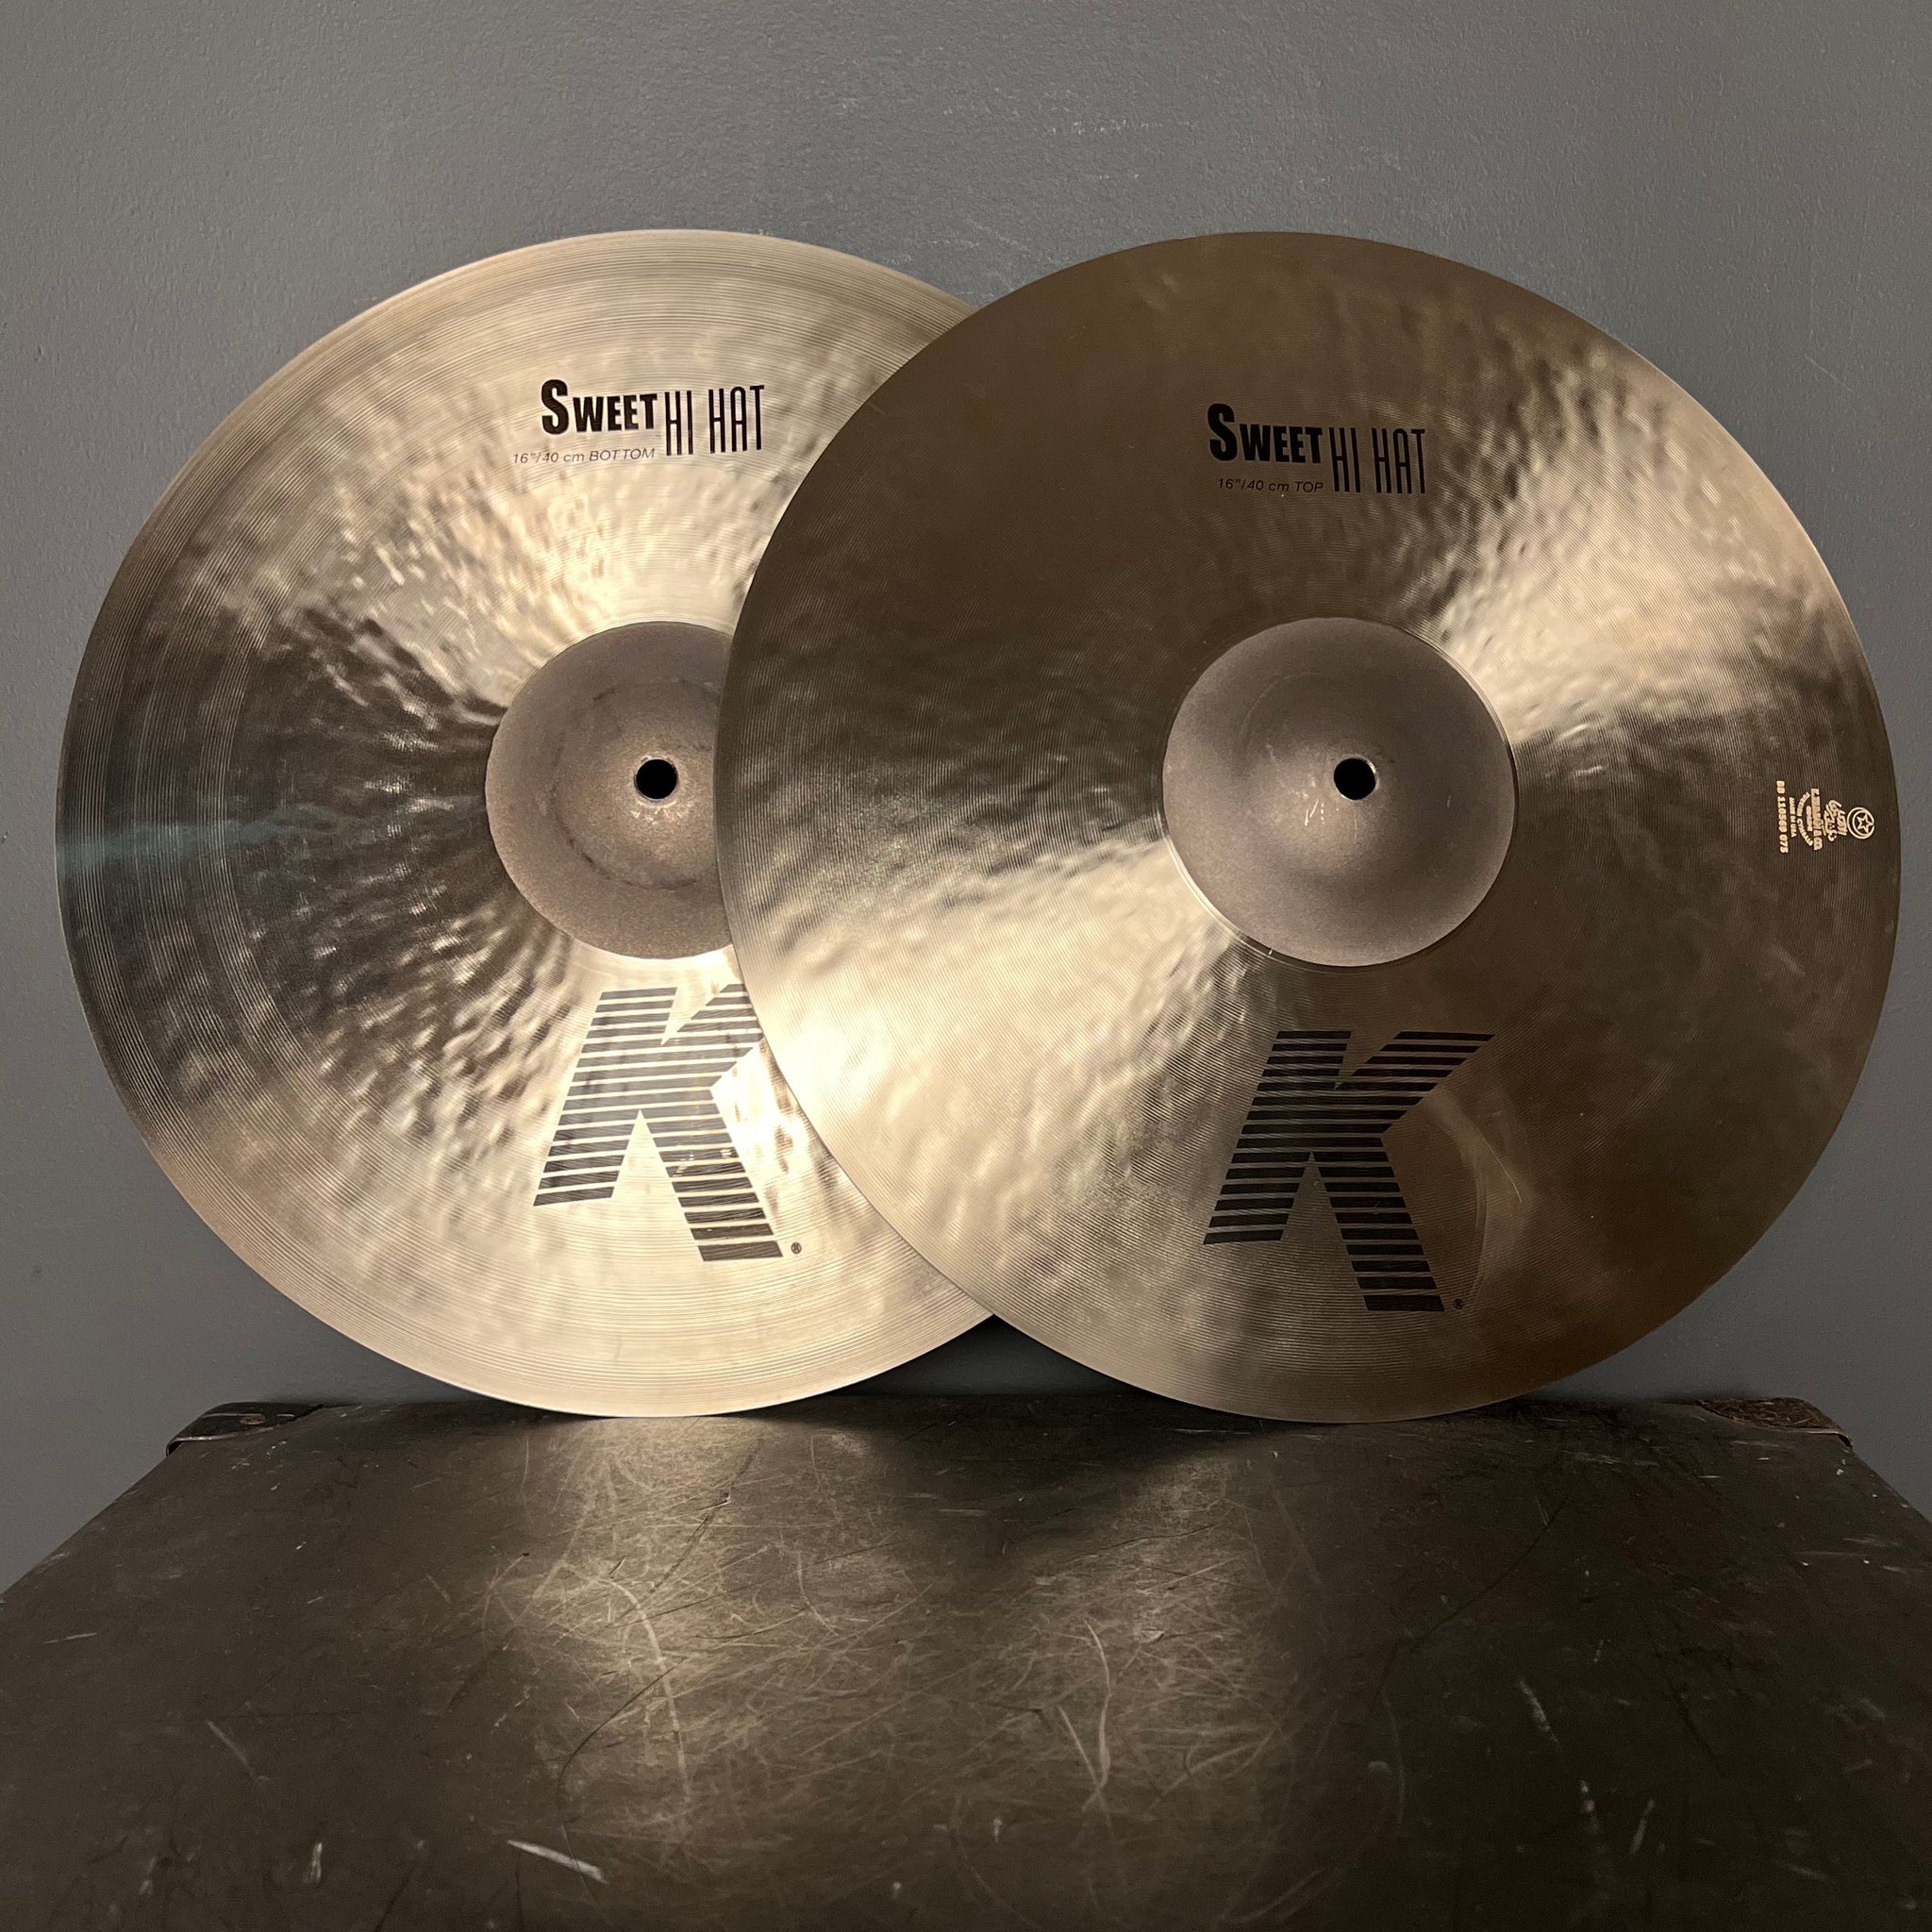 NEW Zildjian 16" K. Zildjian Sweet Hi-Hat Cymbals - 1278/2020g